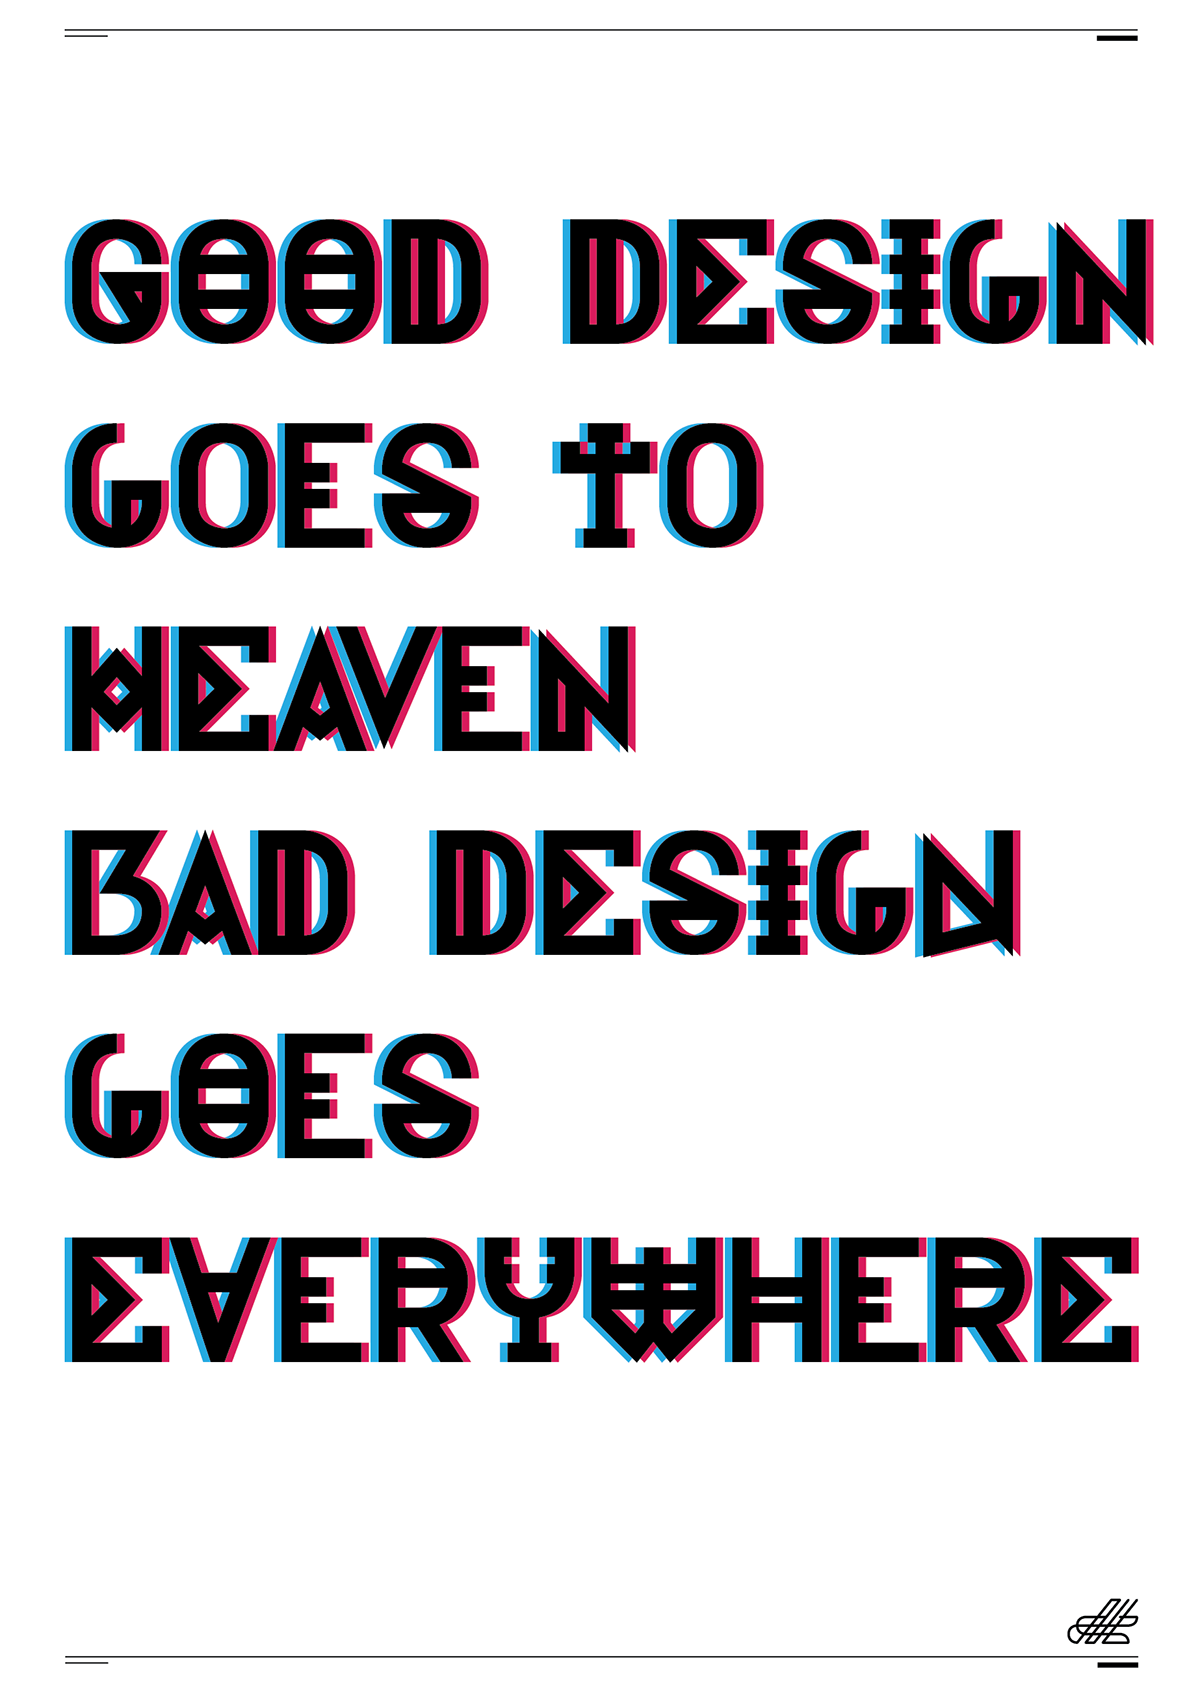 typo typographic Typeface font andreas leonidou Graphic Designer cyprus limassol graphic design modern Display experimental decorative motion